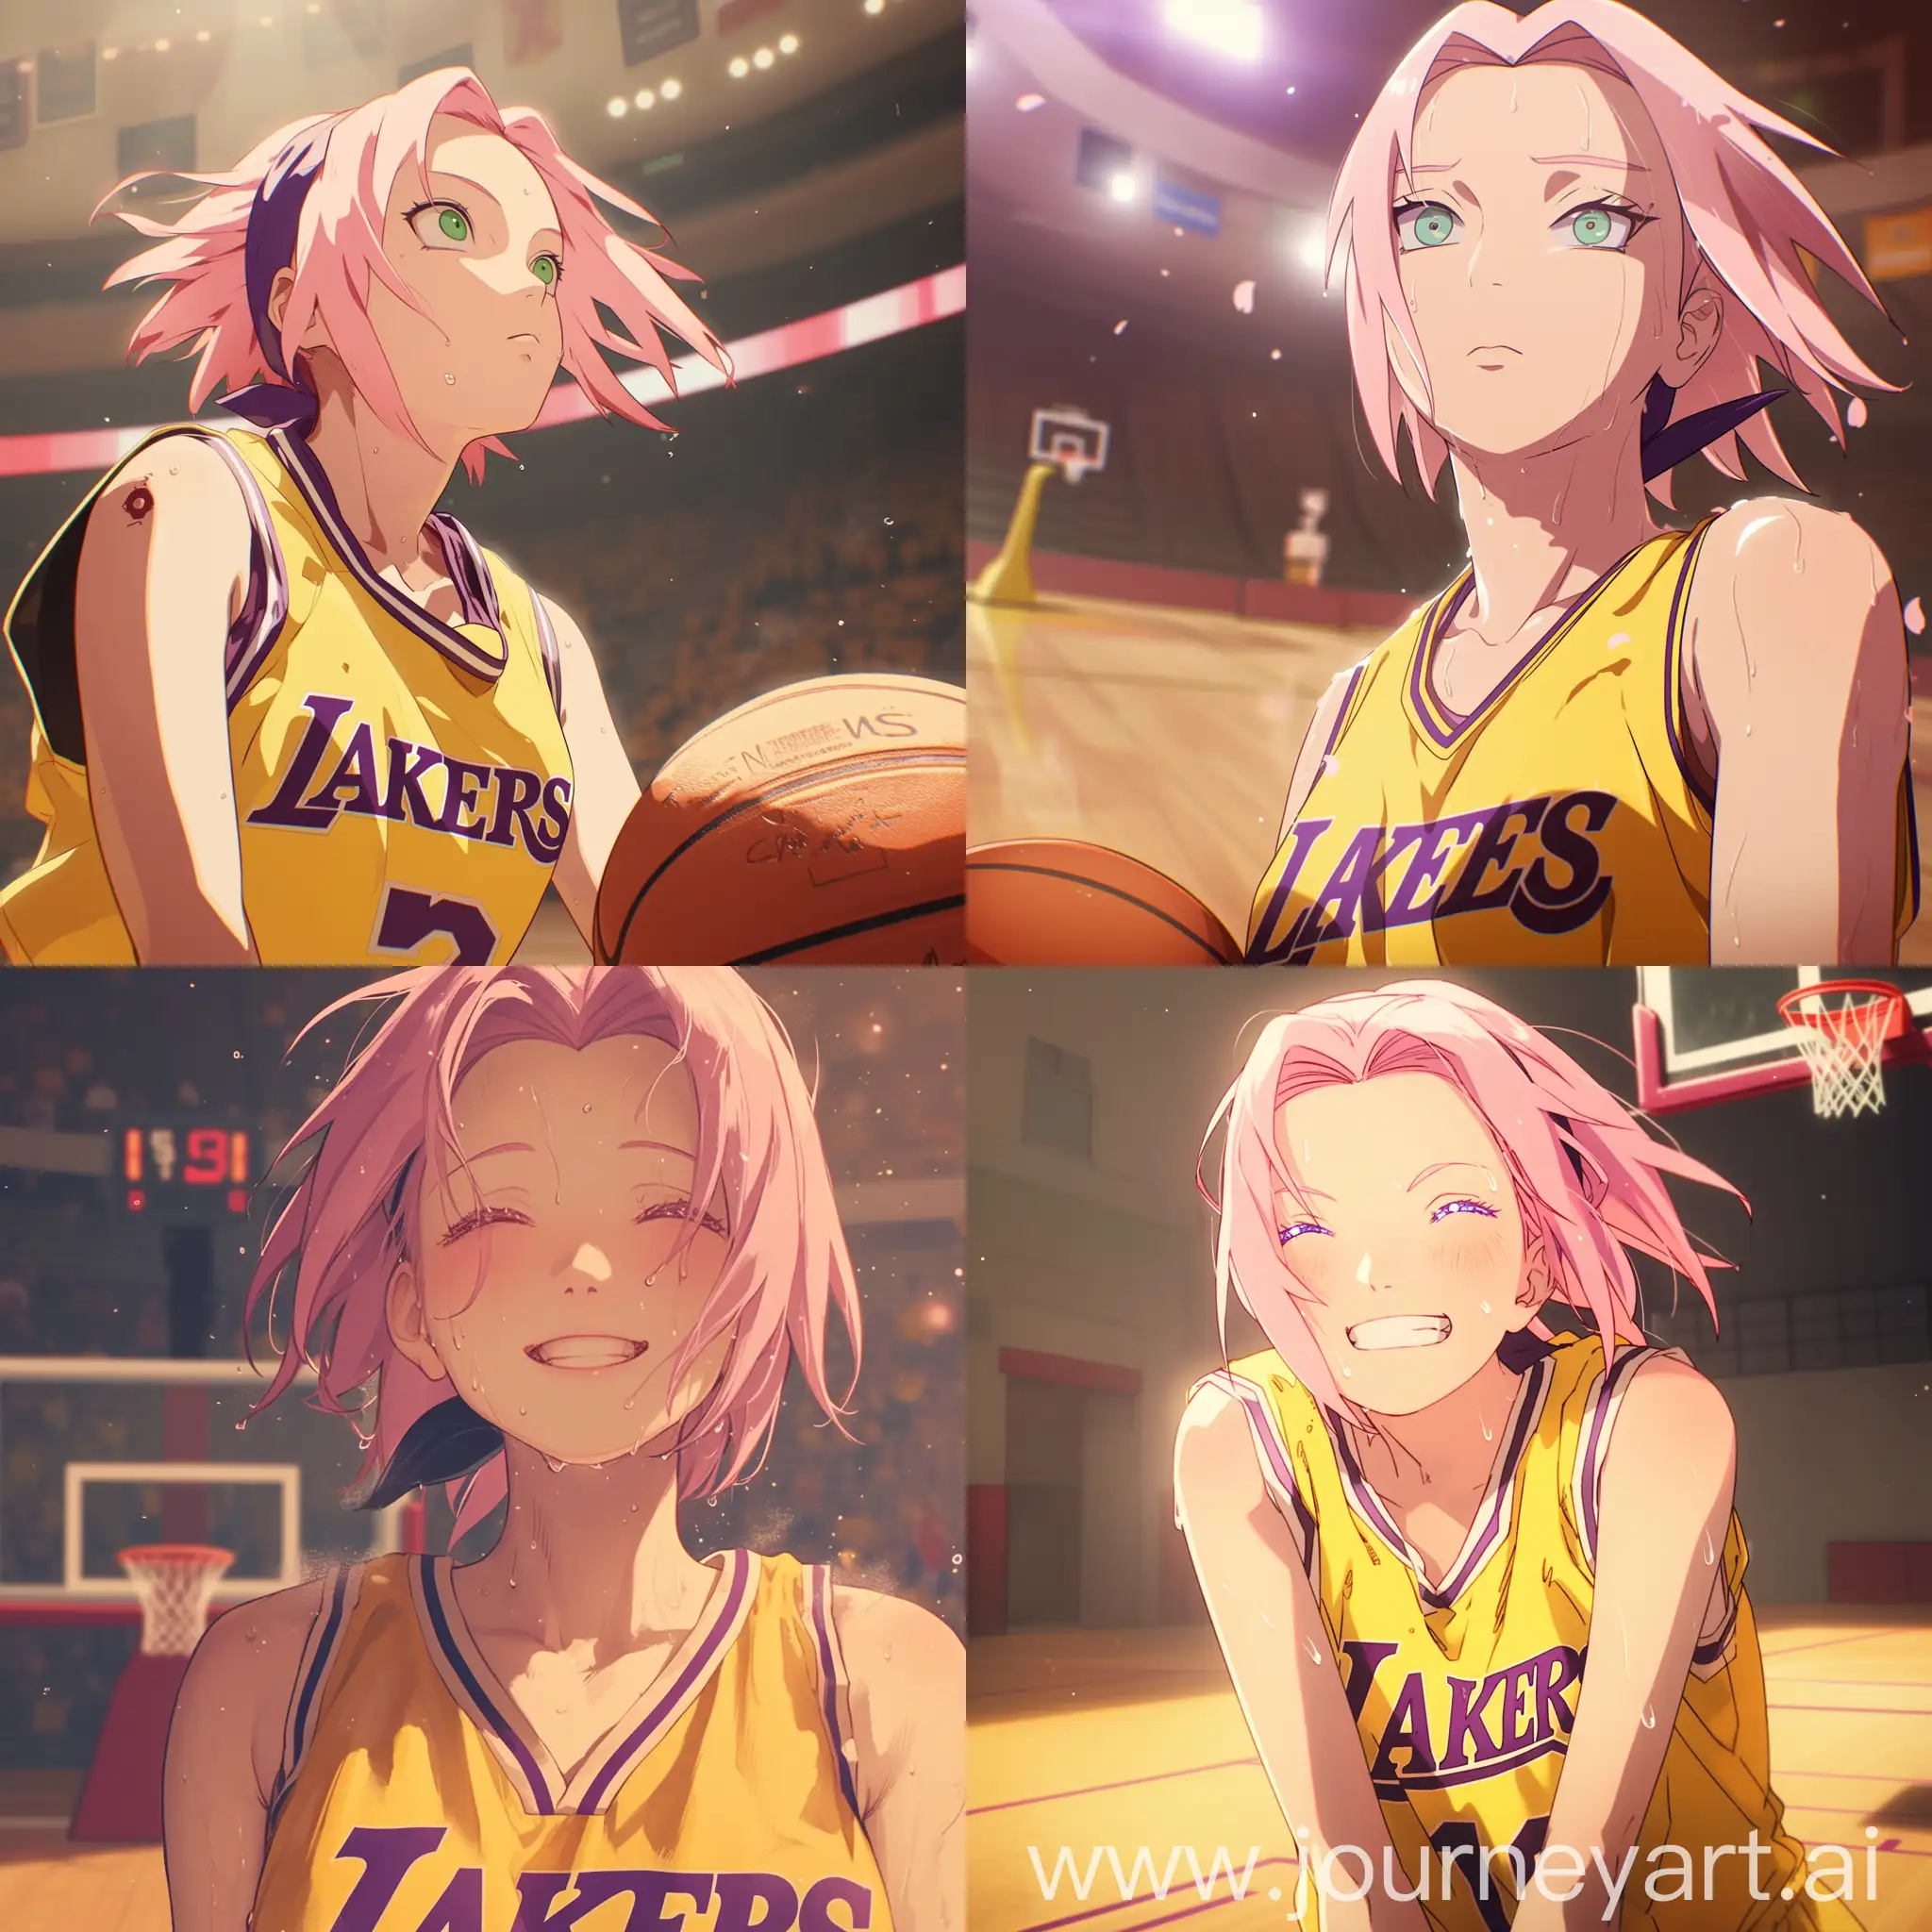 Sakura-Haruno-Playing-Basketball-in-Lakers-Uniform-on-the-Court